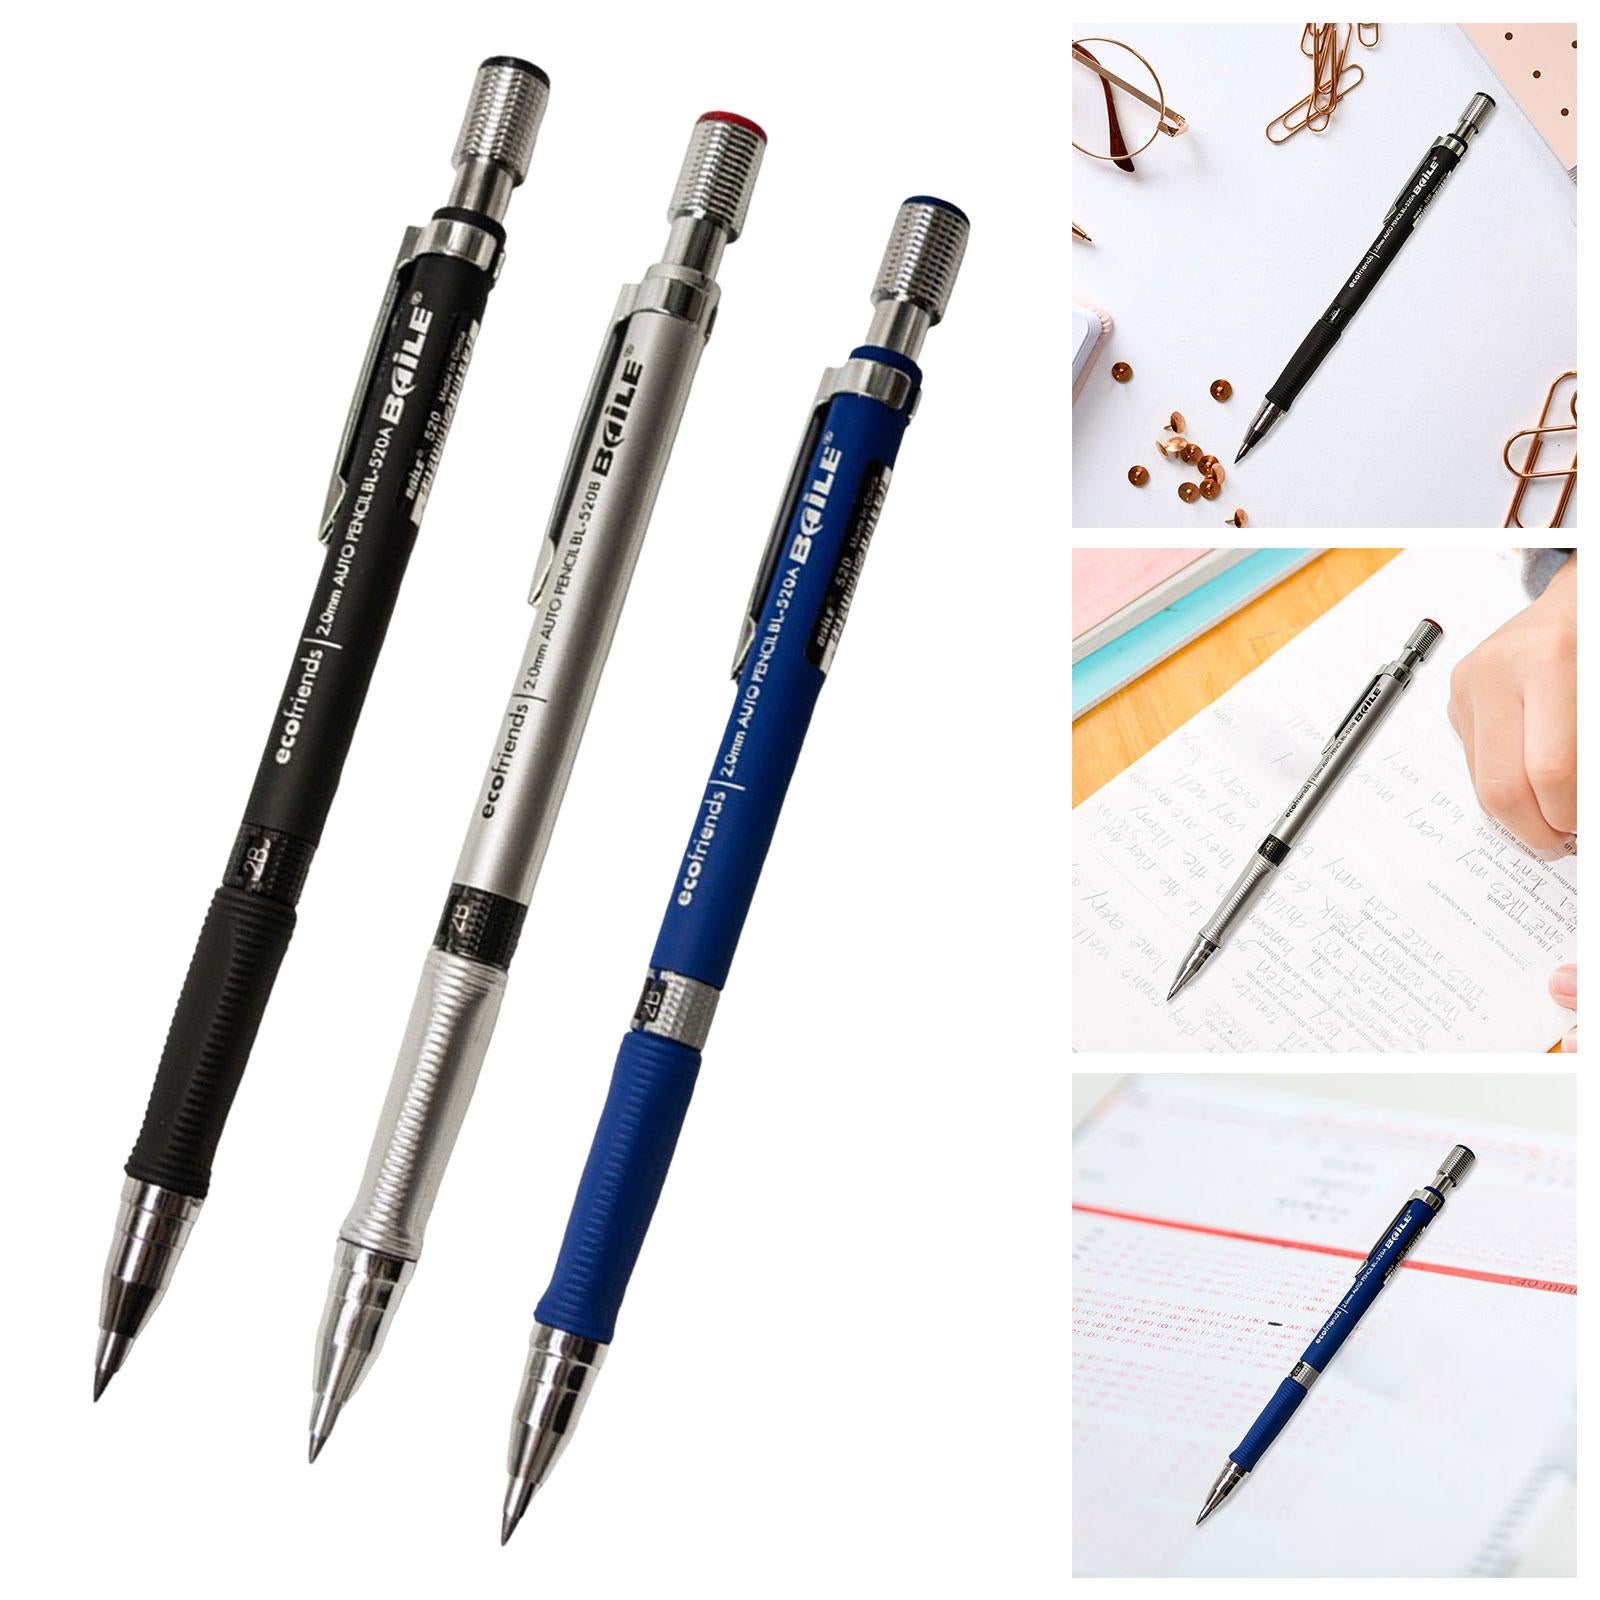 Art Painting Pencils Portable Drafting Pencil for Drafting Writing Sketching Black